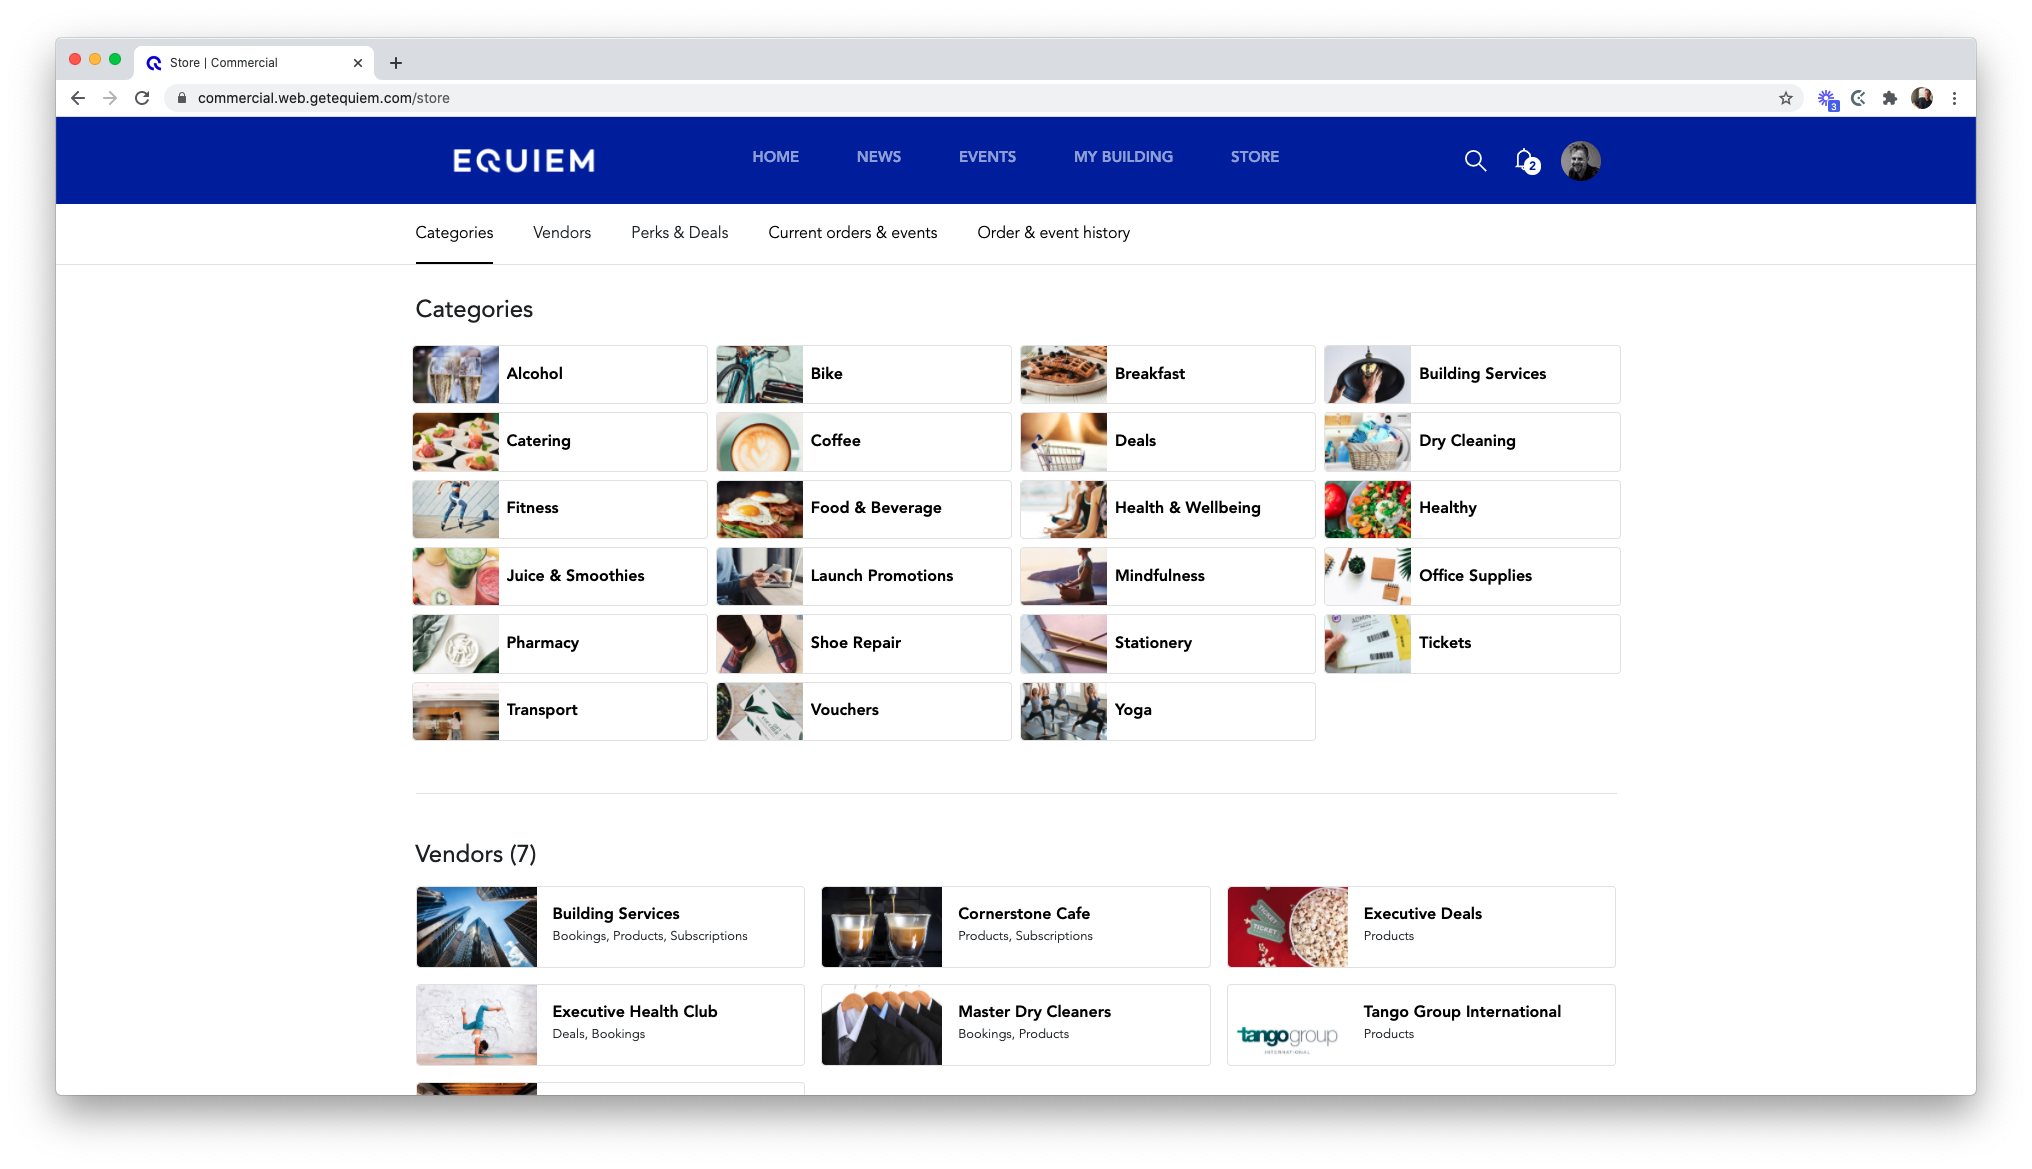 The store page of Equiem's marketplace e-commerce platform.